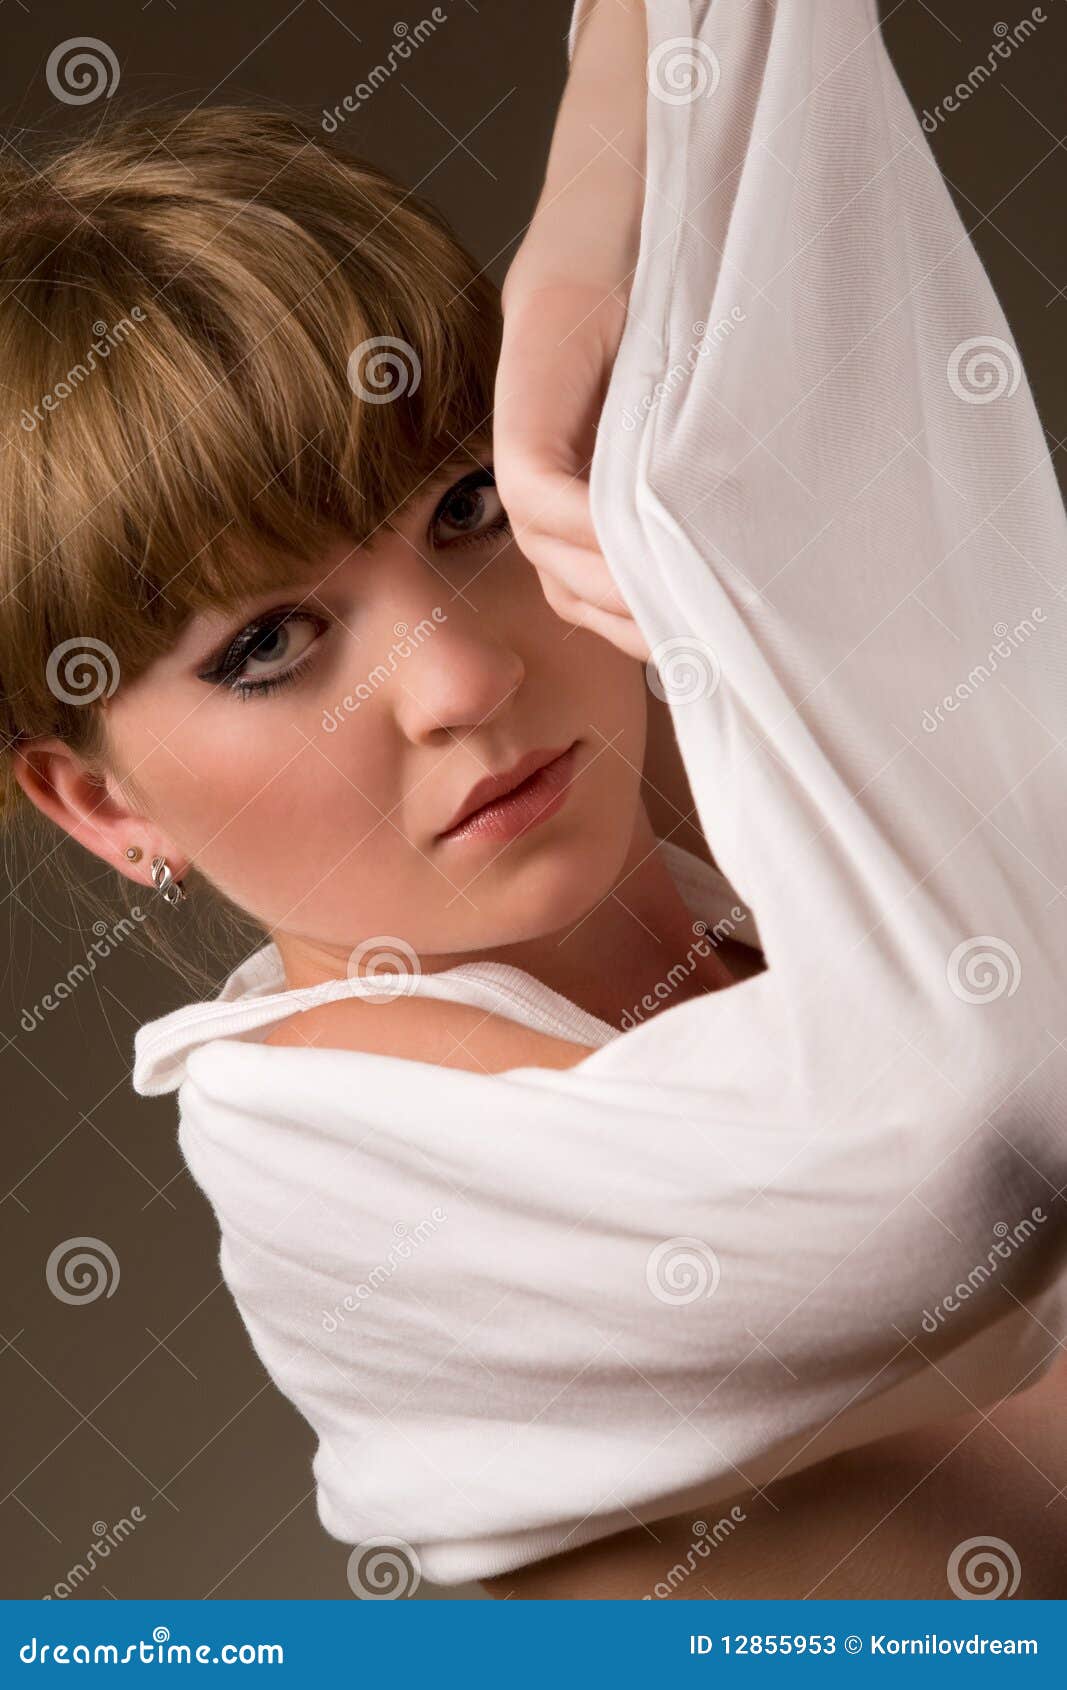 Xxvi Xxvii English Video - Girl undressing XXVII stock image. Image of look, makeup - 12855953